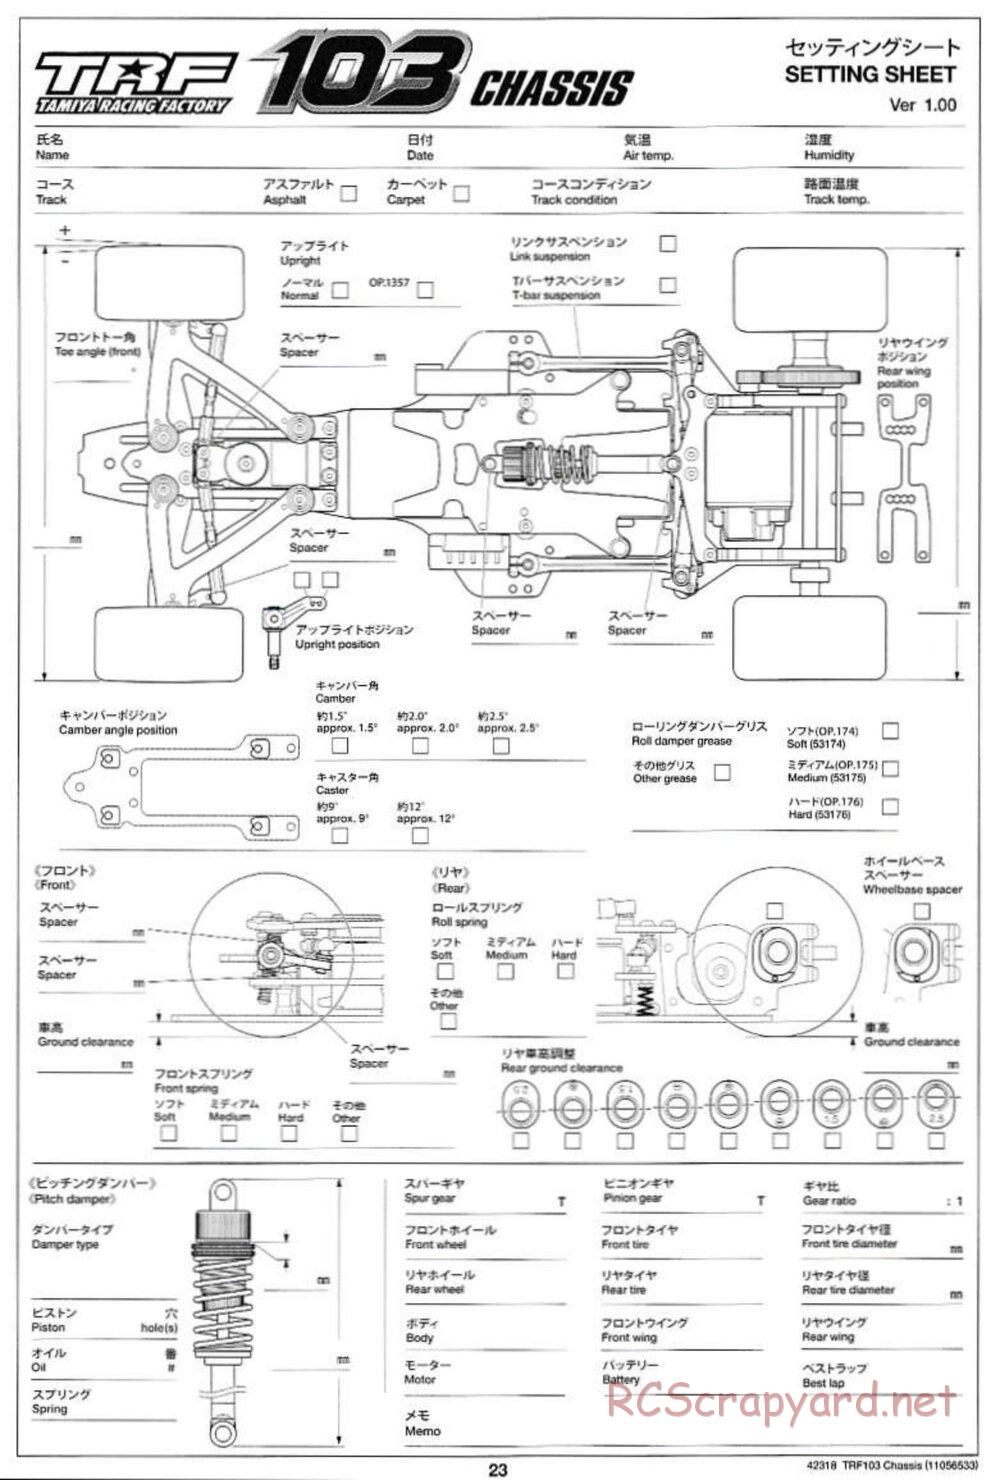 Tamiya - TRF103 Chassis - Manual - Page 23